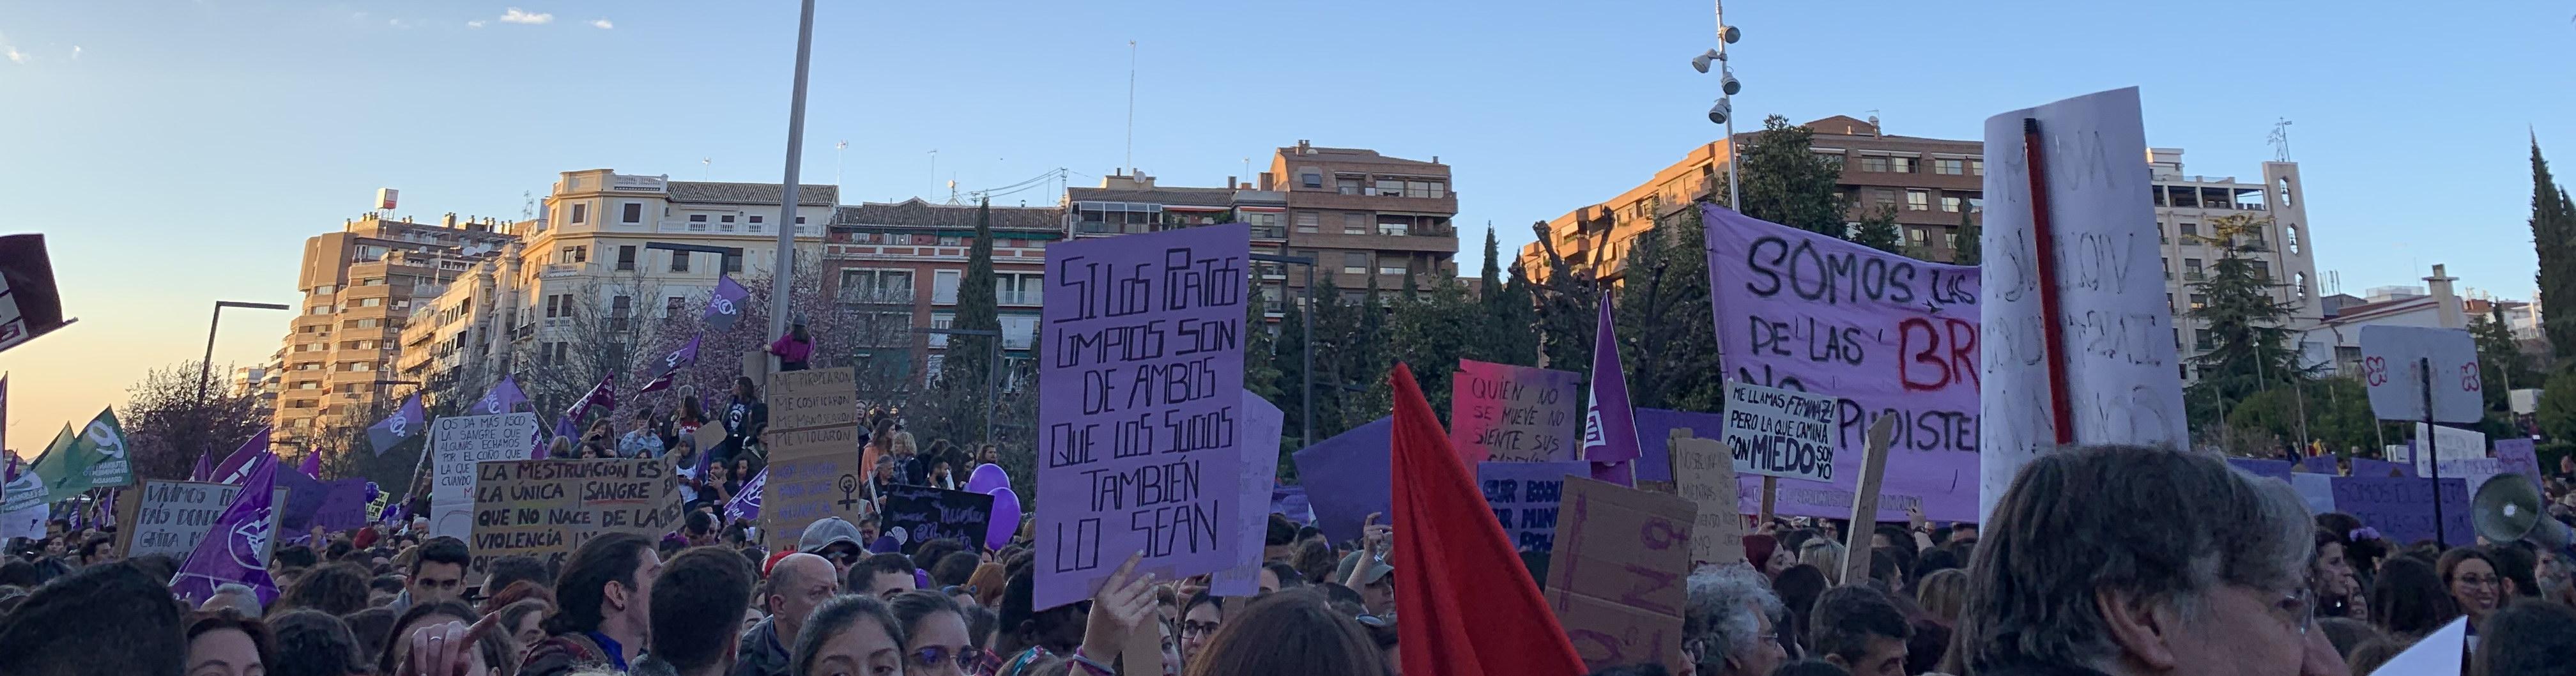 Protest in Spain